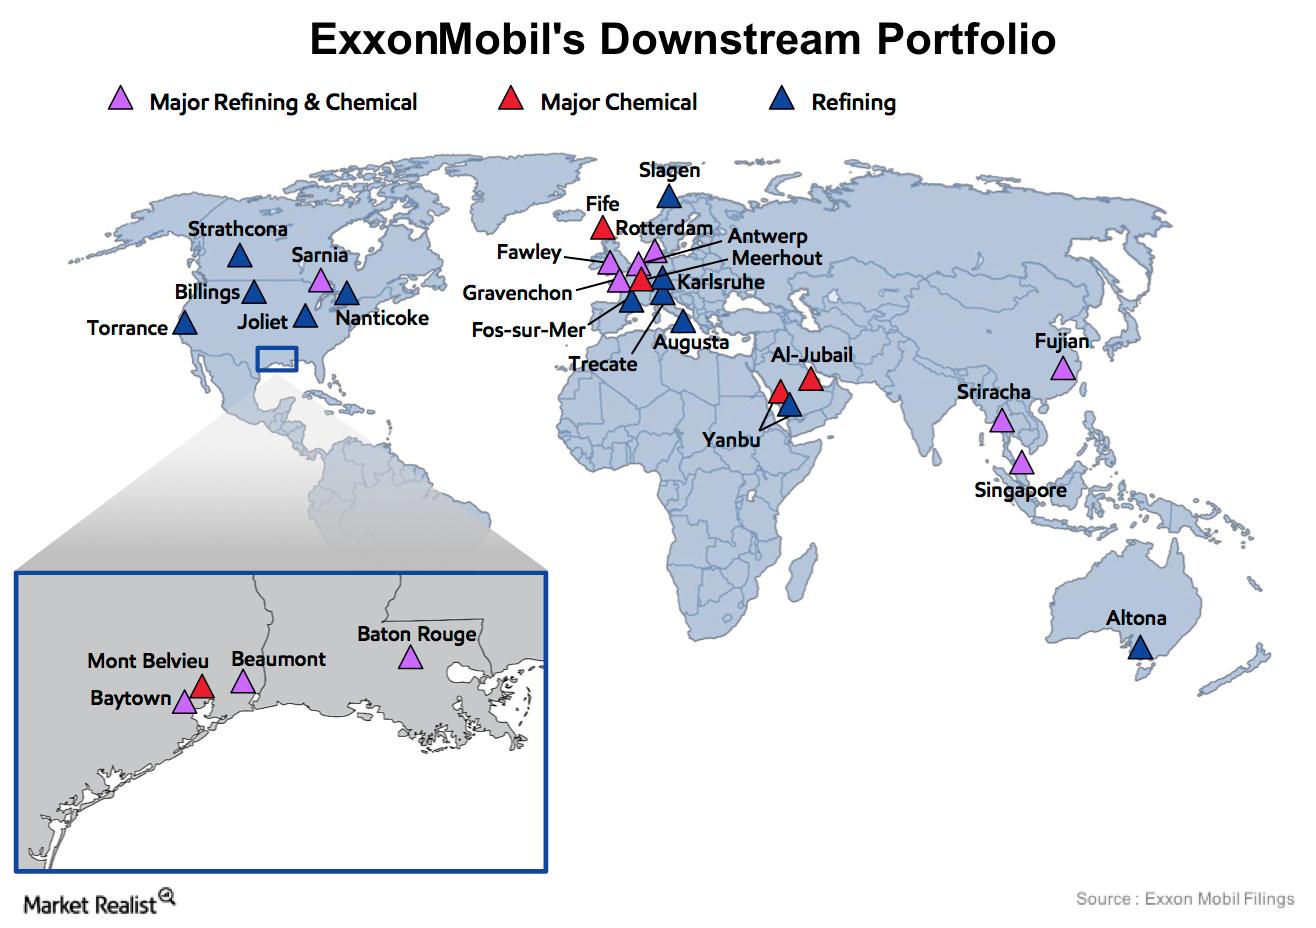 exxon daily production million barrels per day